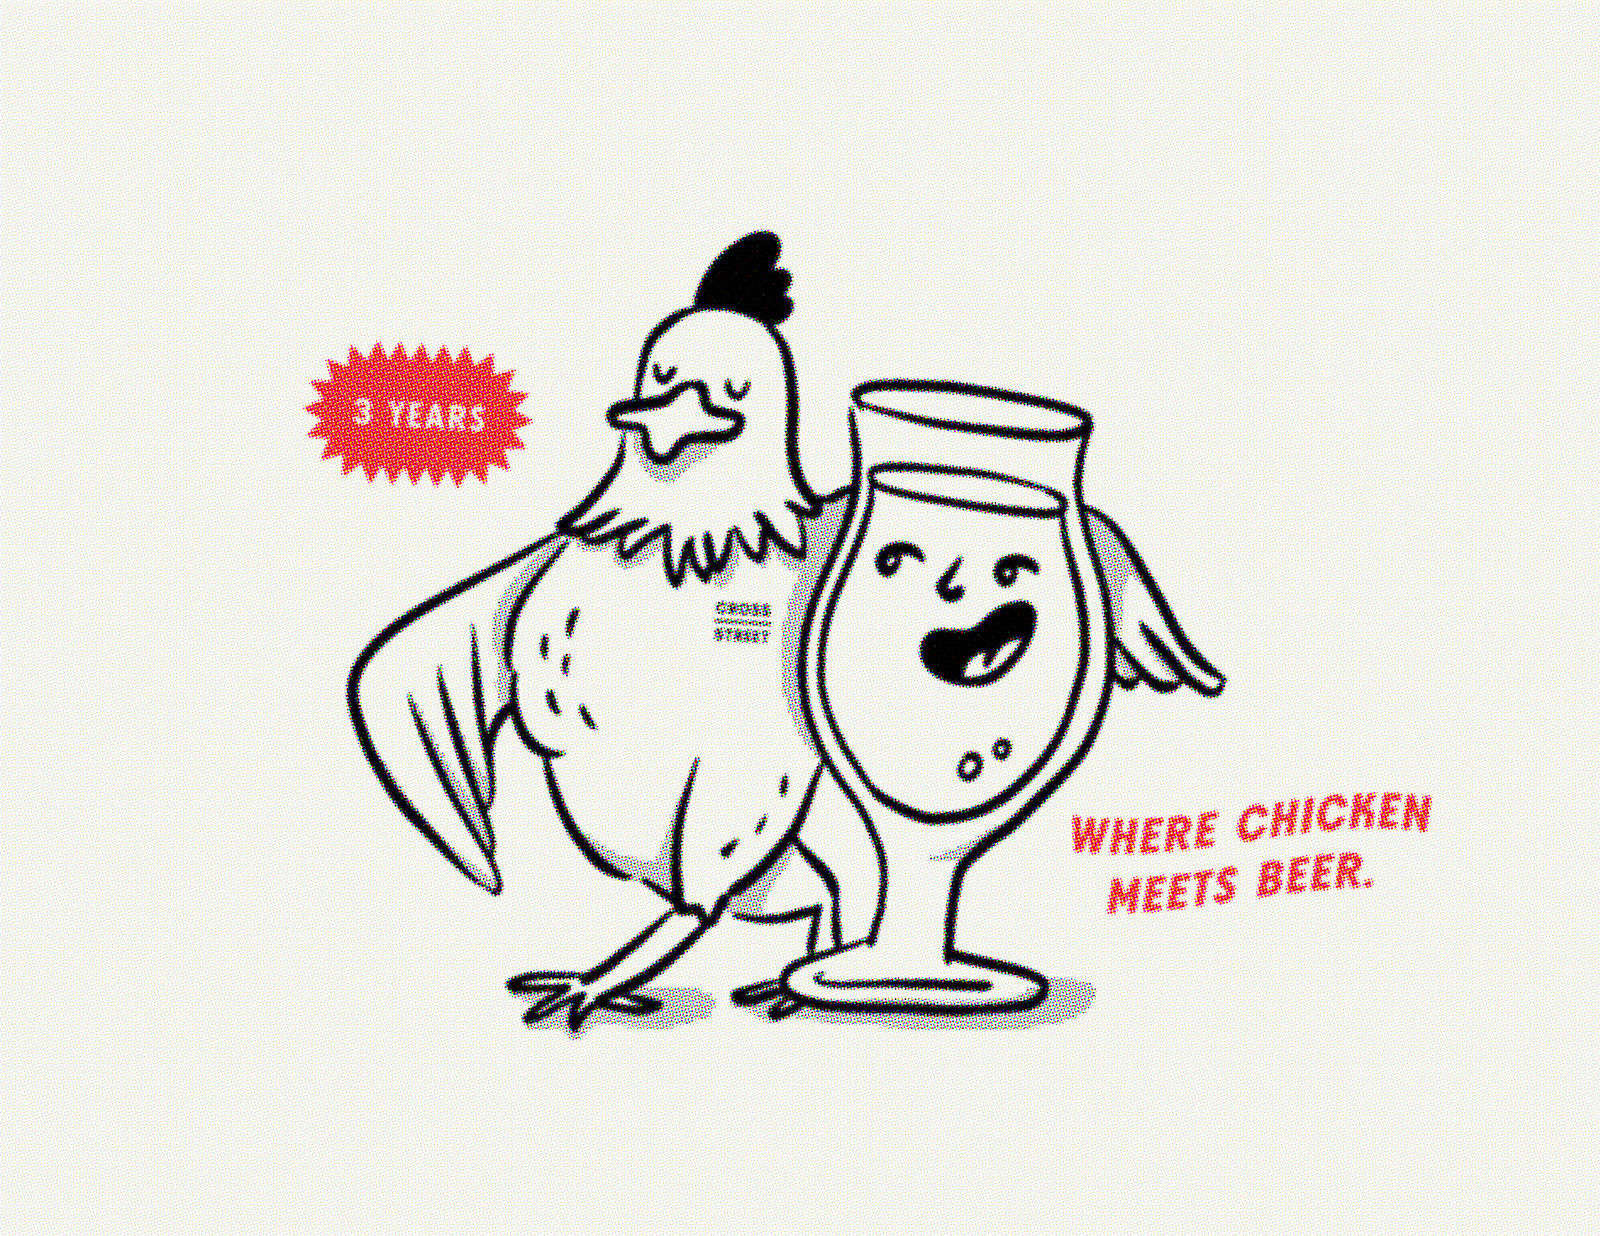 Cross Street chicken and beer restaurant branding by Meiwen See